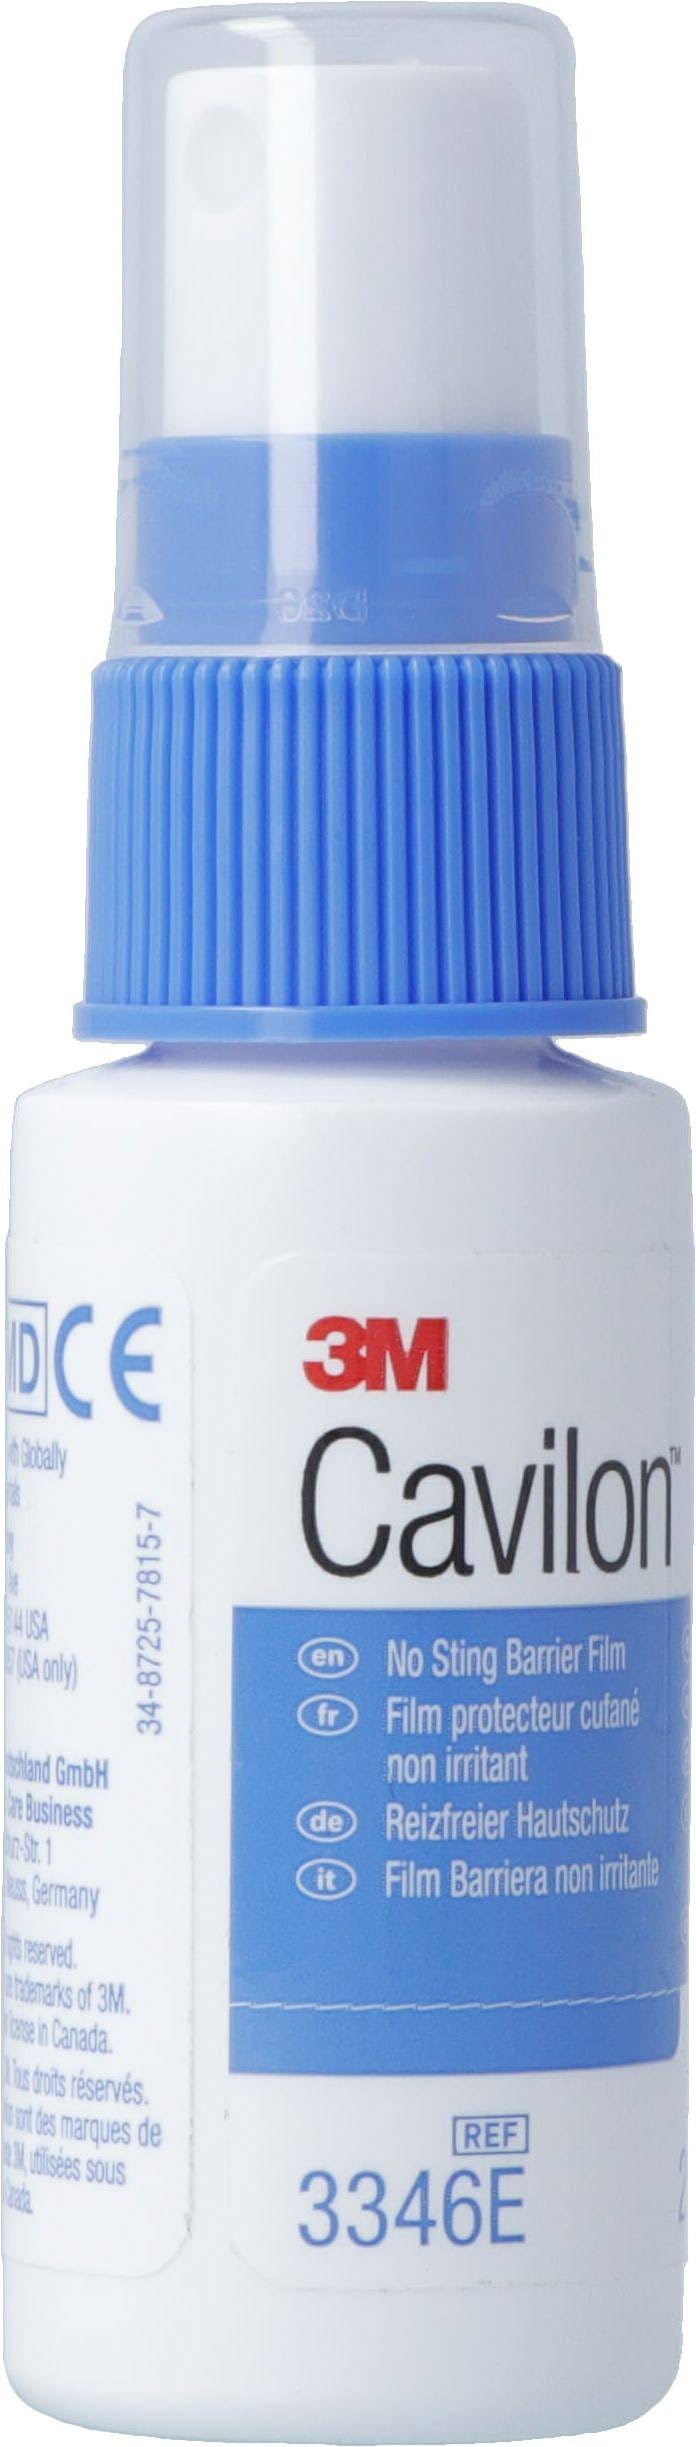 CAVILON Protective barrier spray film